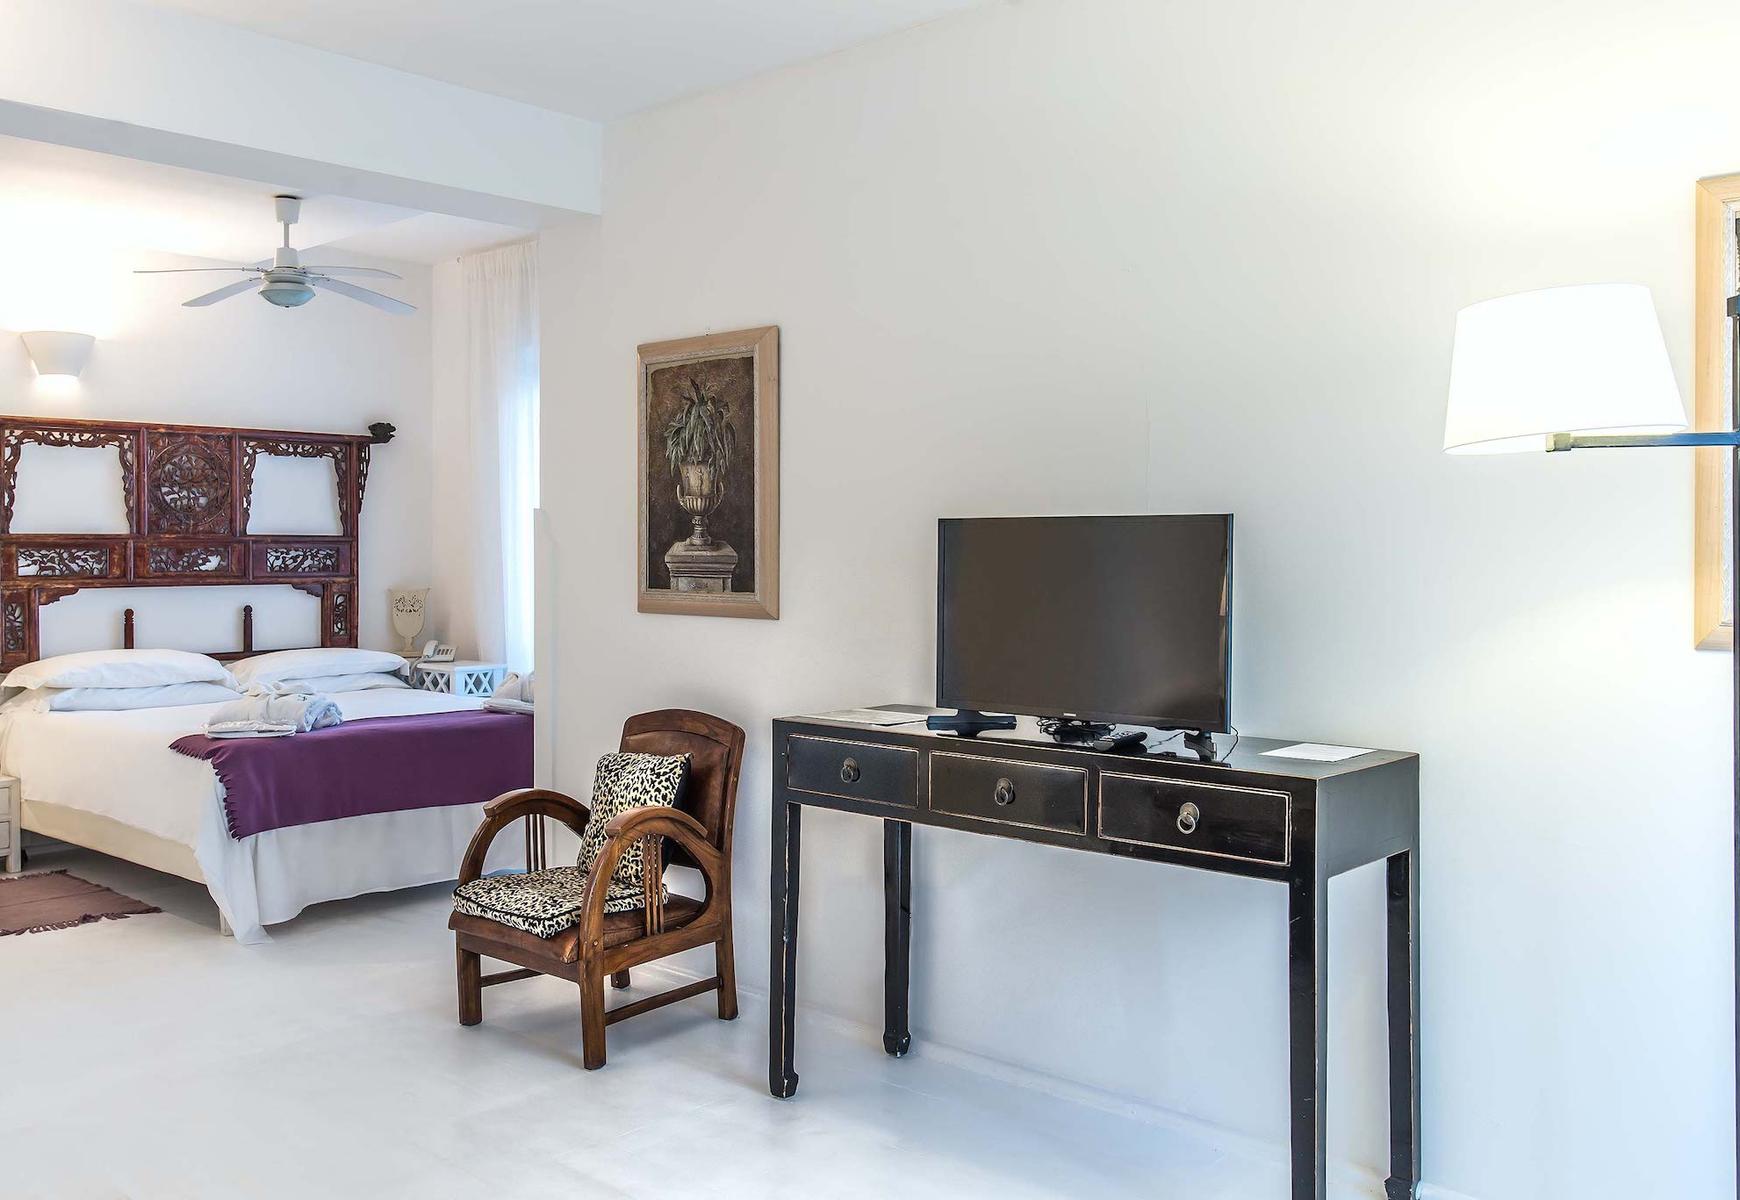 Il San Francesco Charming Hotel | Sabaudia (LT) | Accommodation 04 - 1